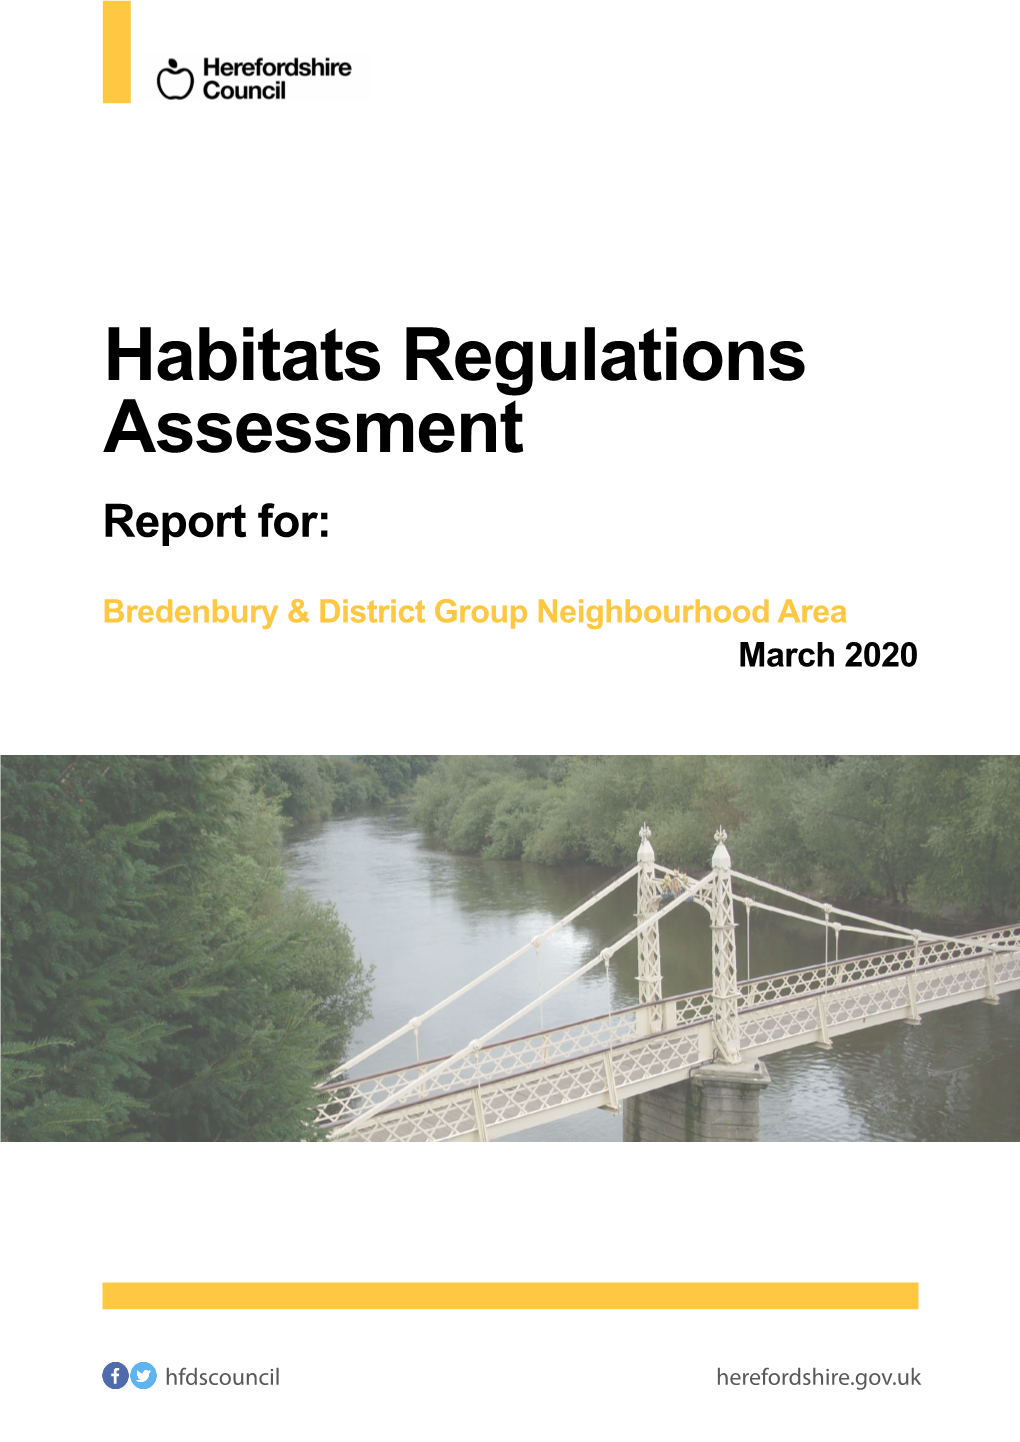 Bredenbury & District Group Habitats Regulations Assessment March 2020